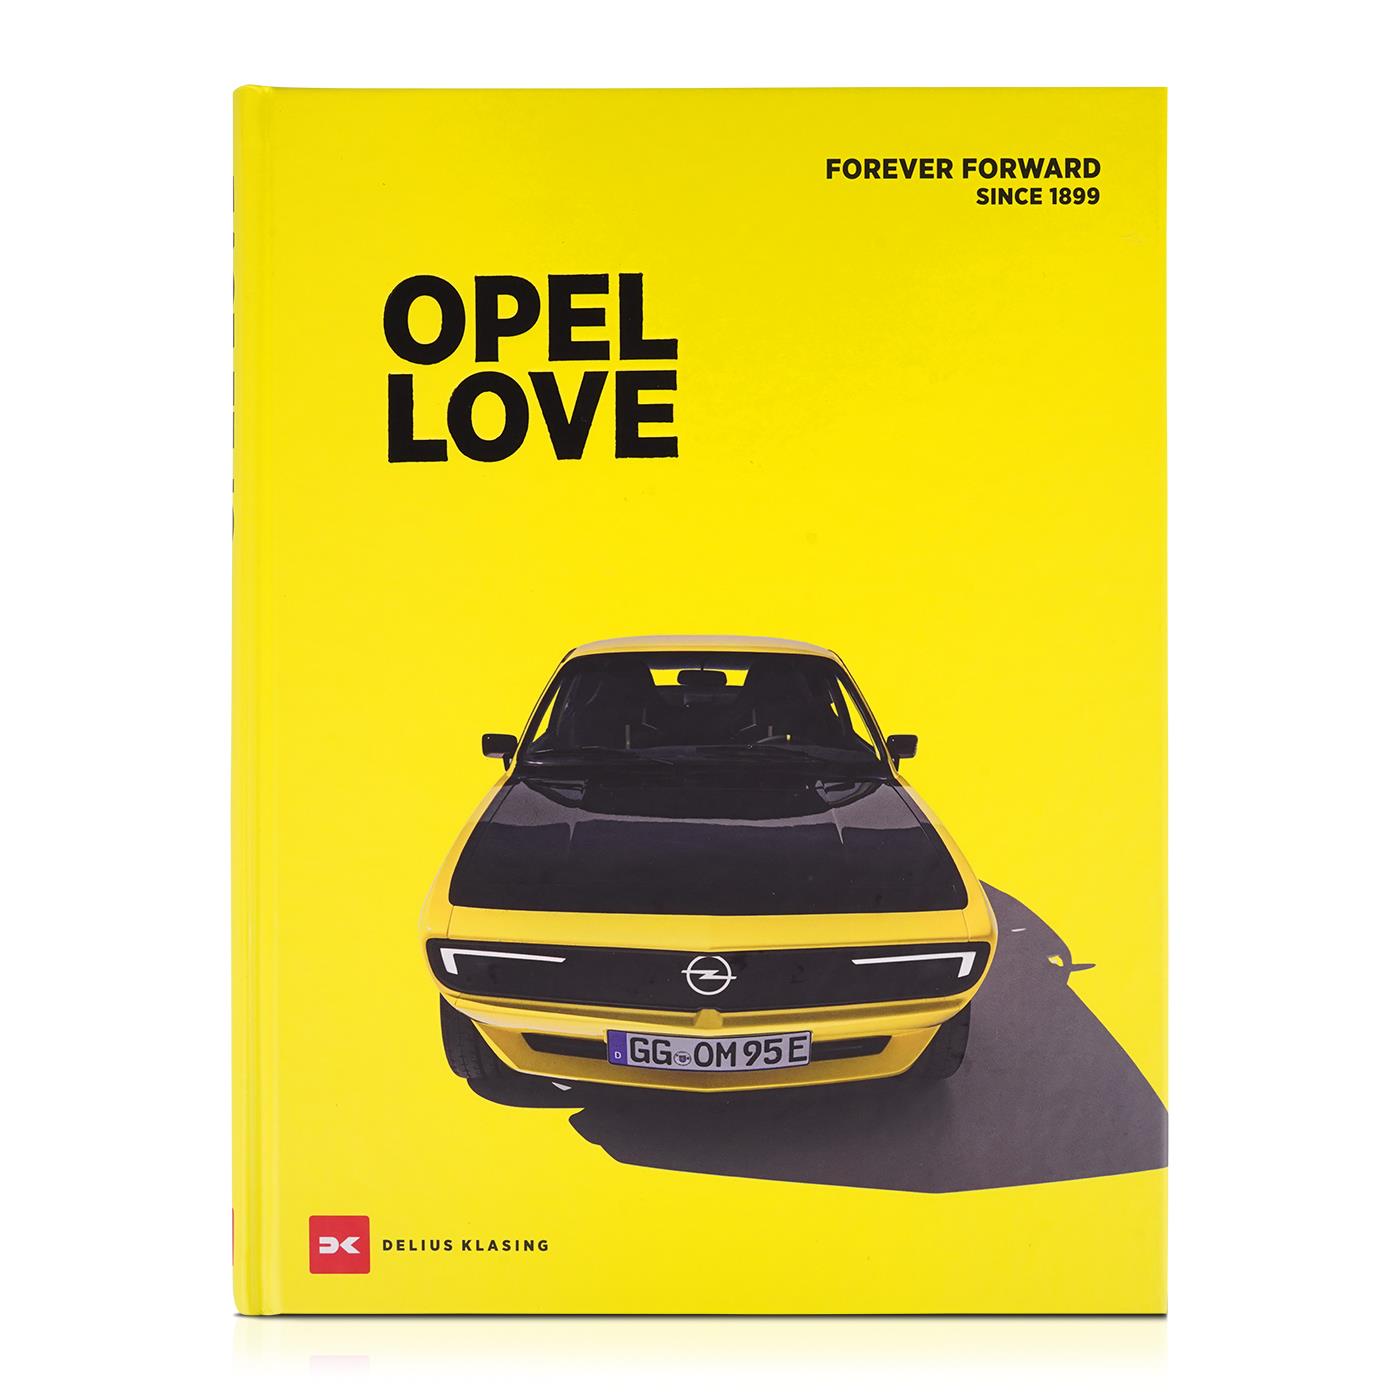 Opel Love: Forever Forward Since 1899